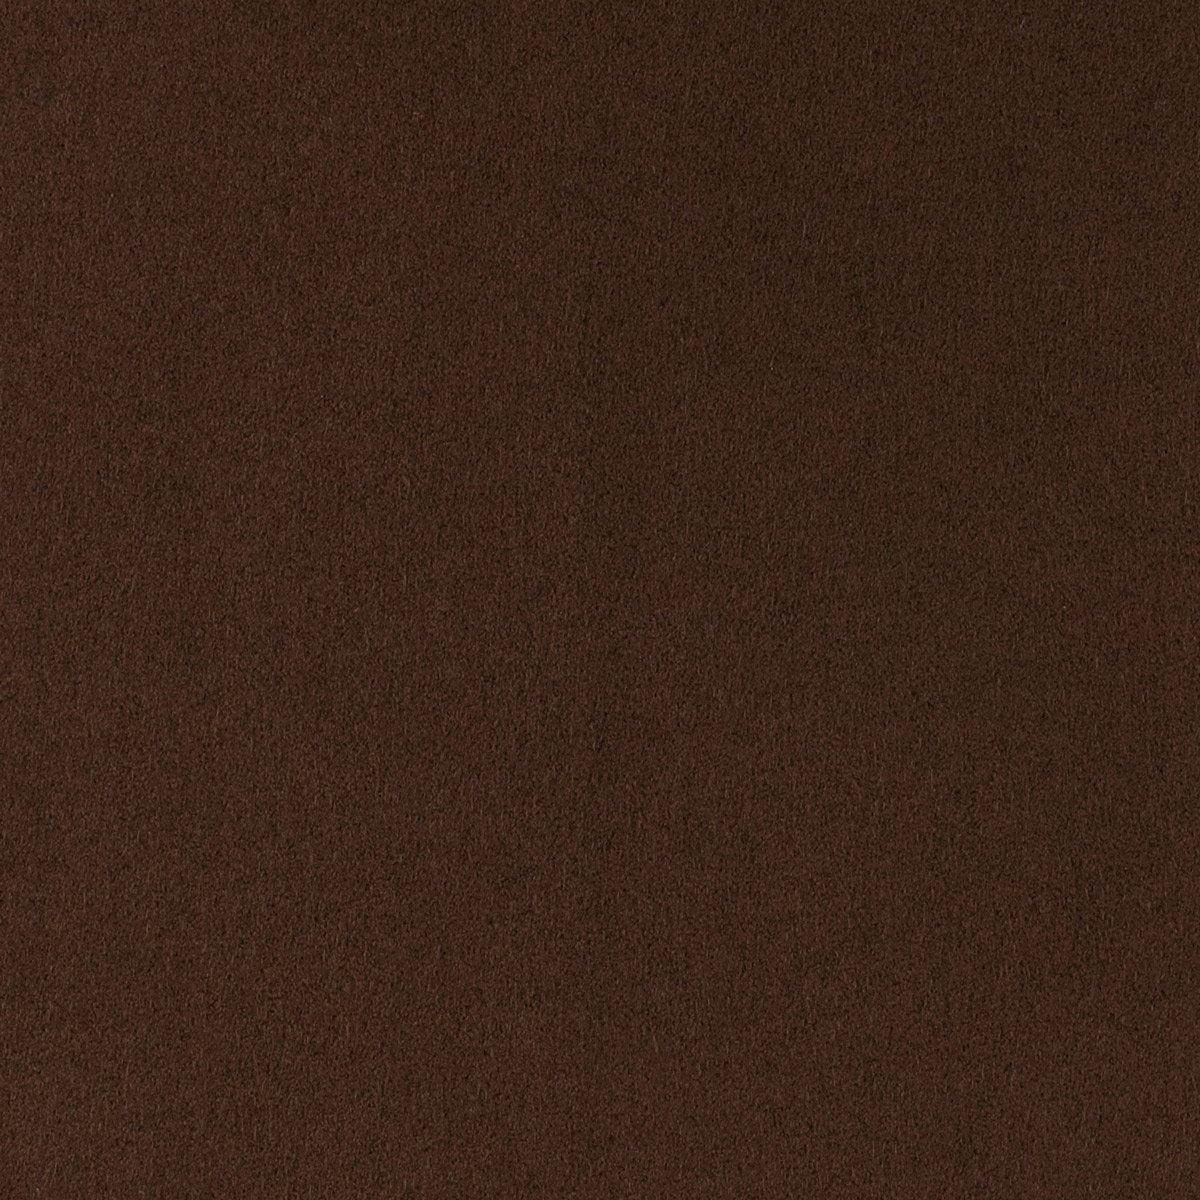 Toray Ultrasuede® ST 3572 Coffee Bean Fabric